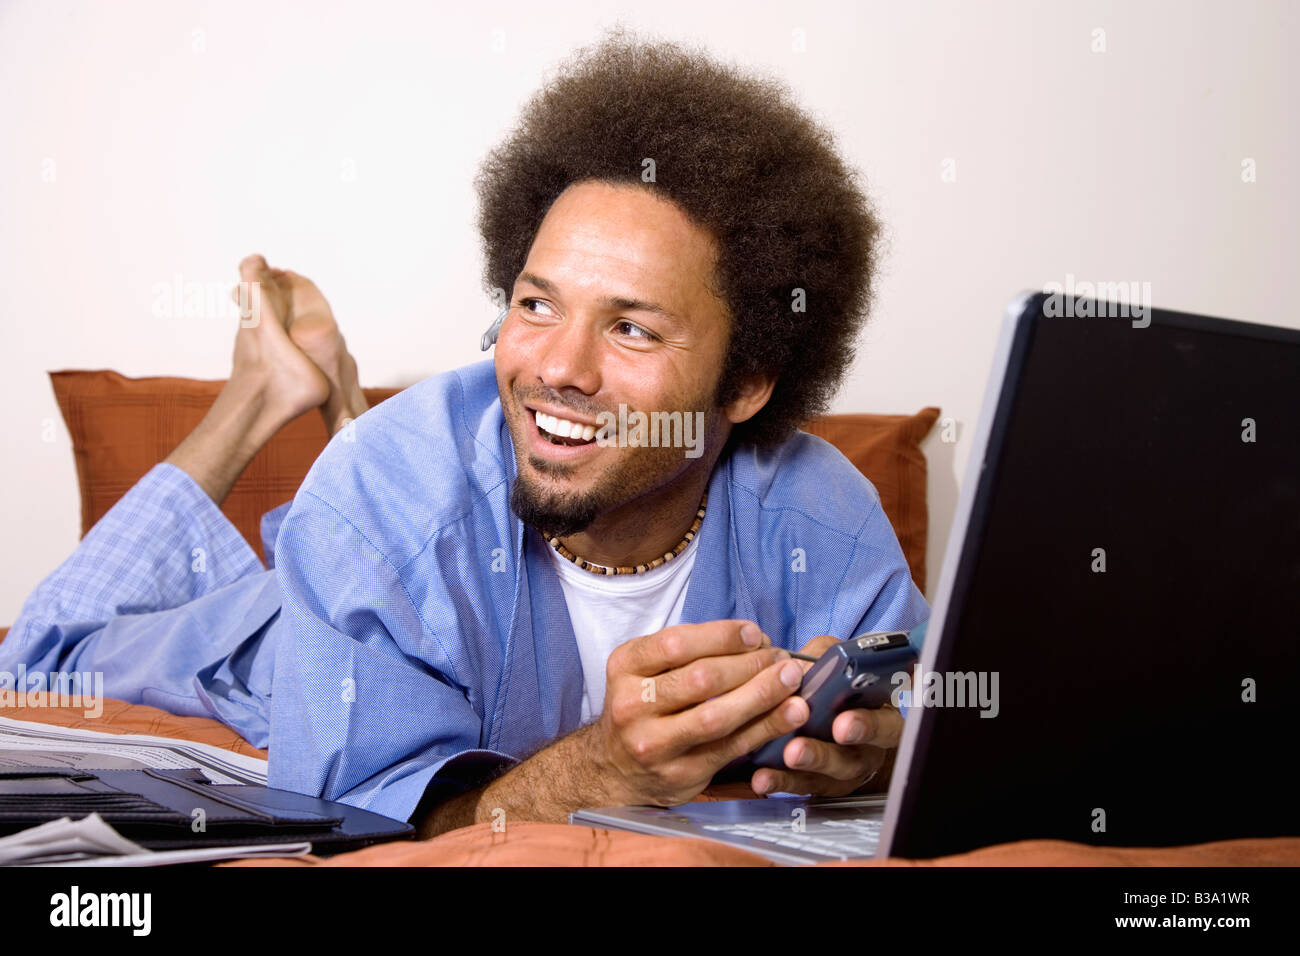 African man using electronic organizer Stock Photo